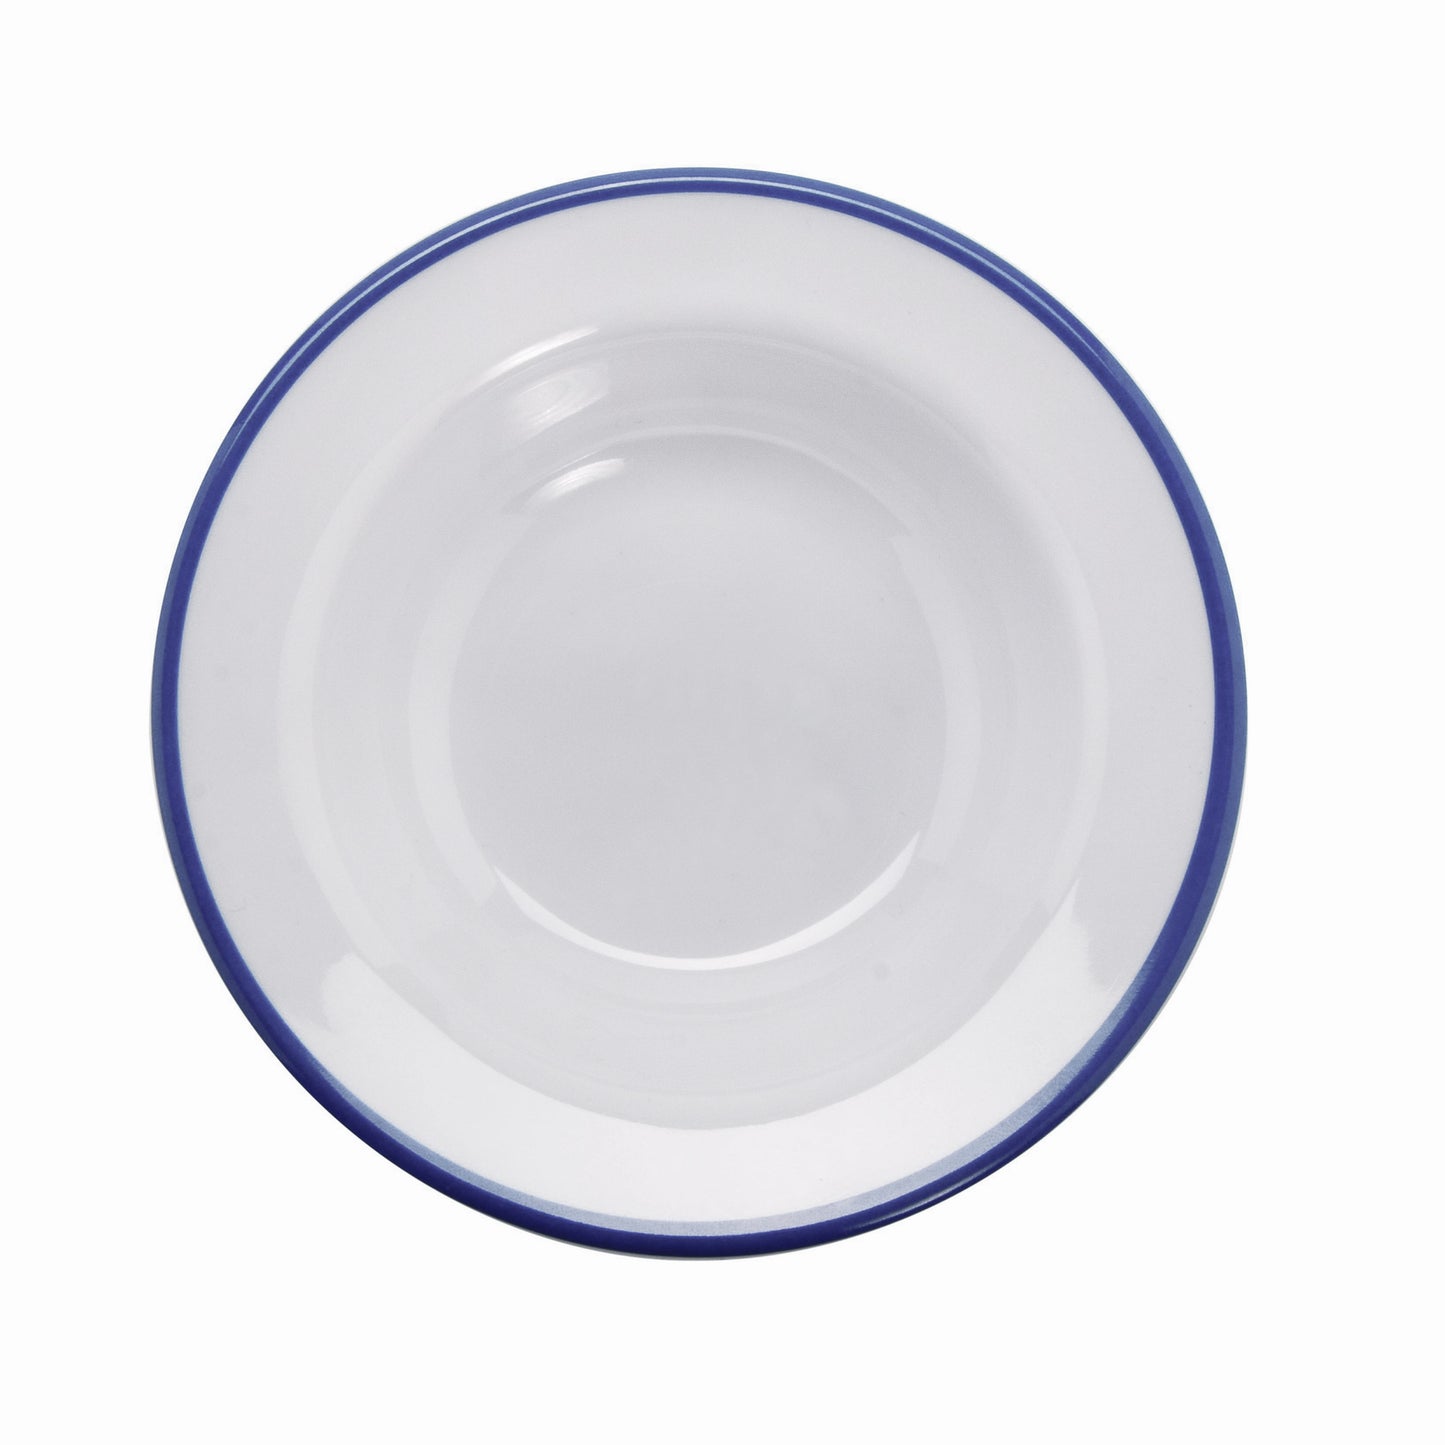 4.5 oz.  White with Blue Trim, Enamelware Melamine Small Round Side Dish Bowl, 5.5 oz. rim-full, 5" dia., 1.25" deep, G.E.T. Settlement Bistro (12 Pack)